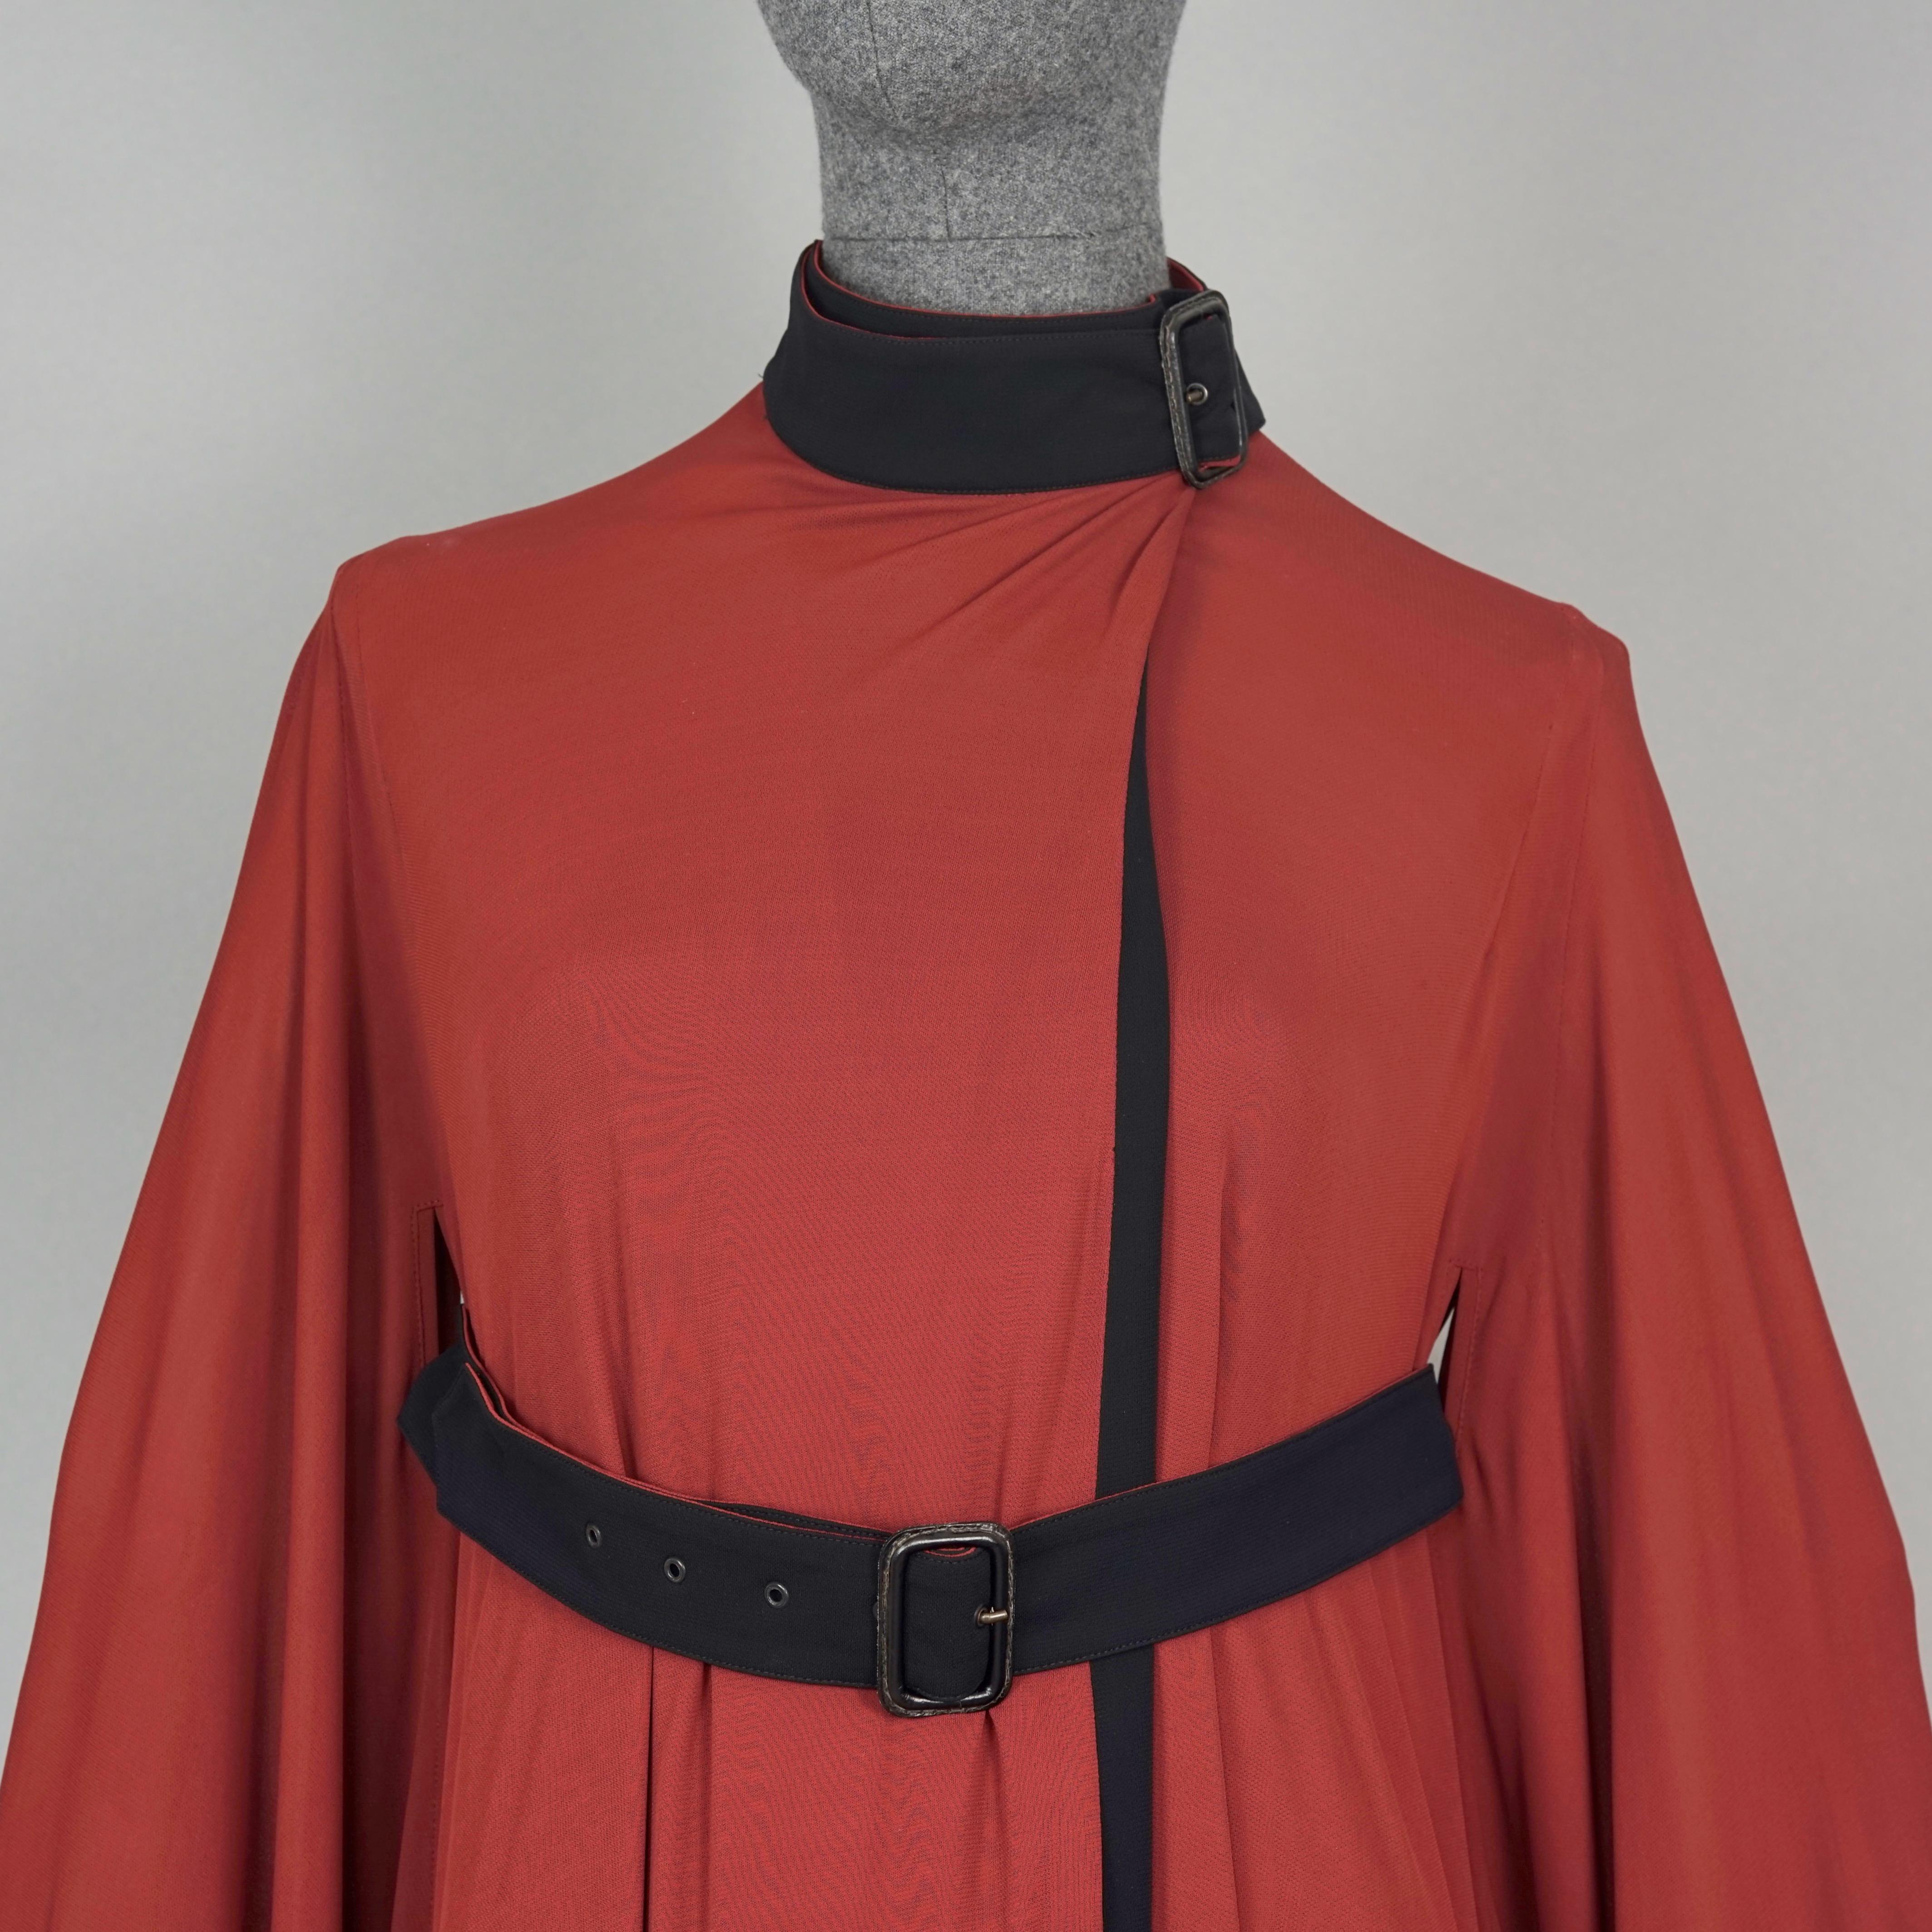 Vintage JEAN PAUL GAULTIER Belted Bondage Rust Cape Dress 2